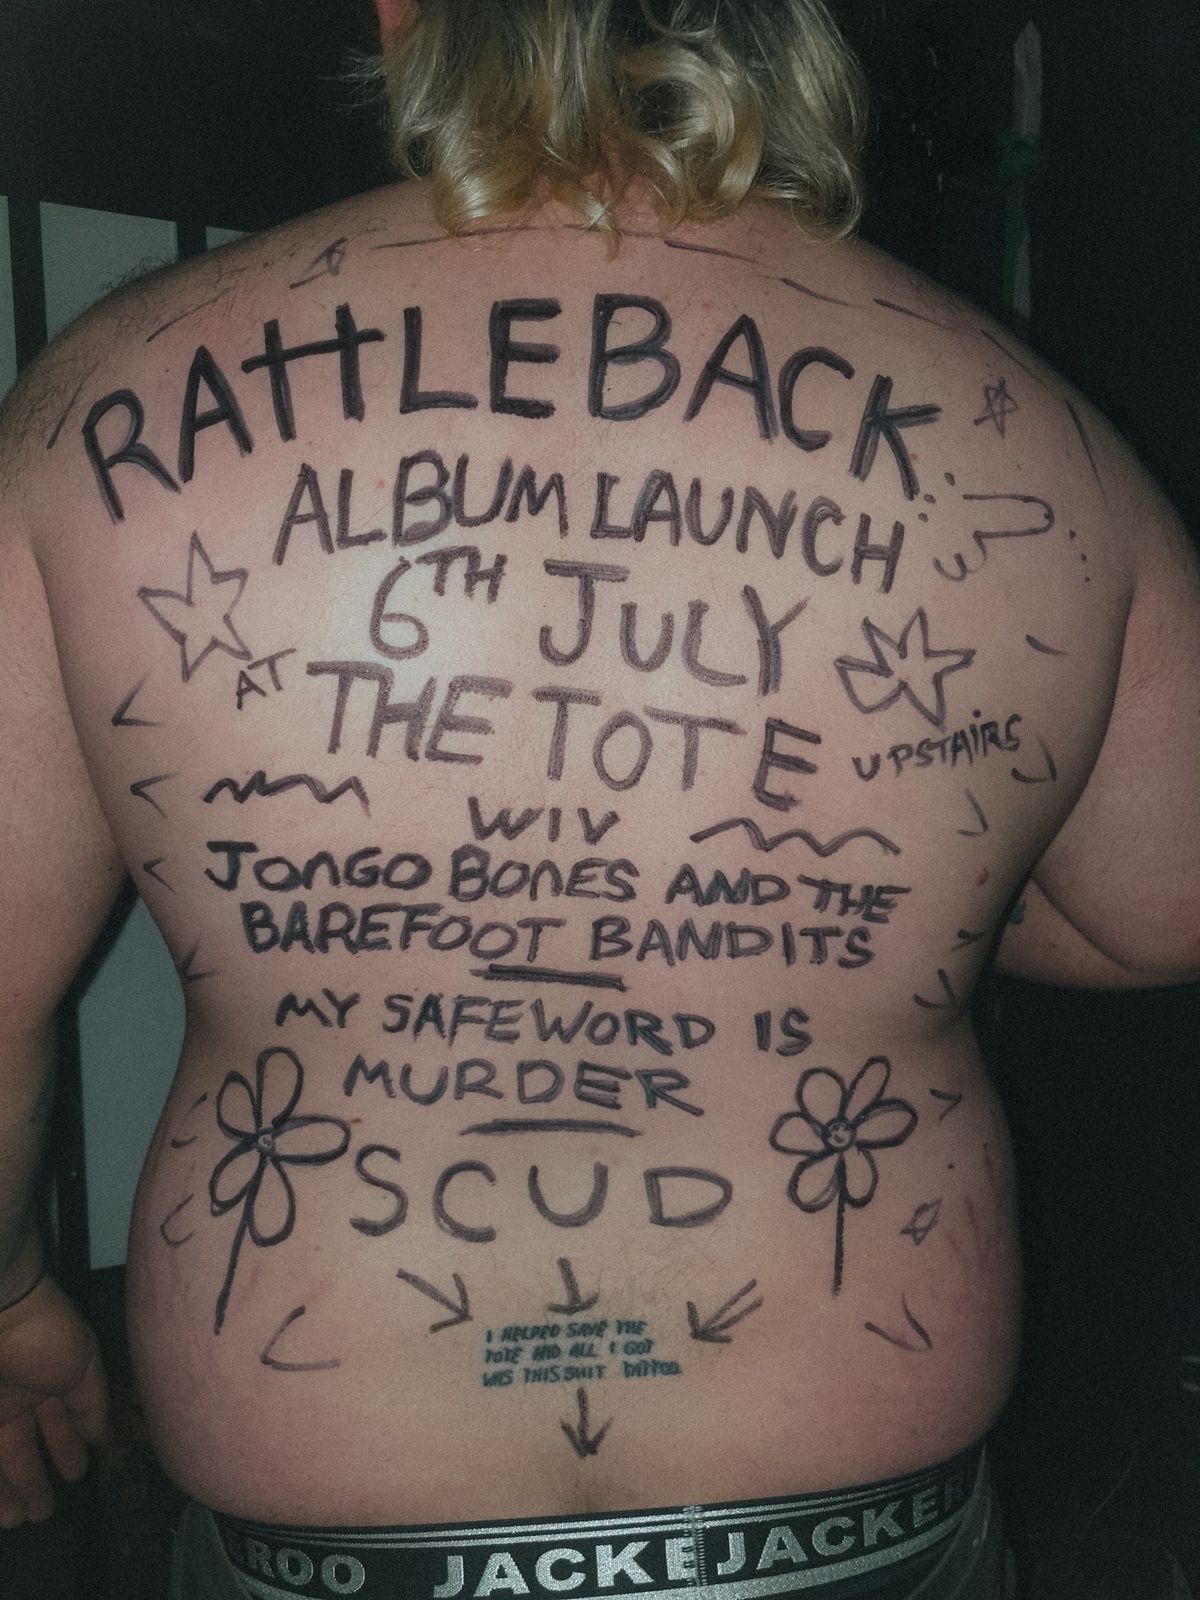 Rattleback EP Launch w\/ Jongo Bones and the Barefoot Bandits, My Safe Word is Murder, & Scud